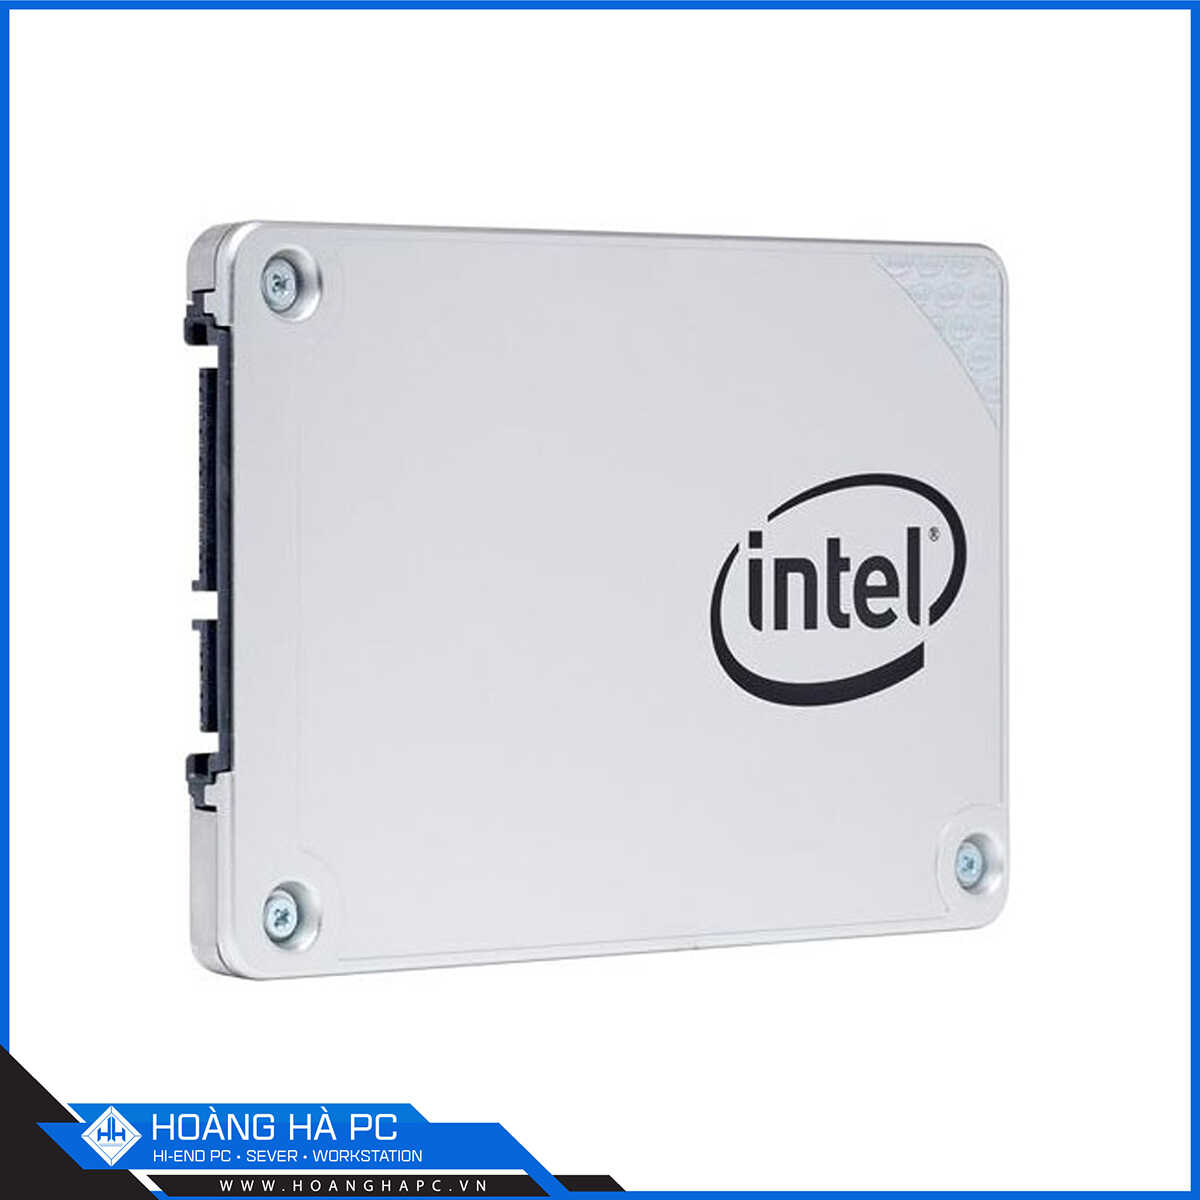  Intel Pro SSD 5400s 240G 2.5 inch Sata3